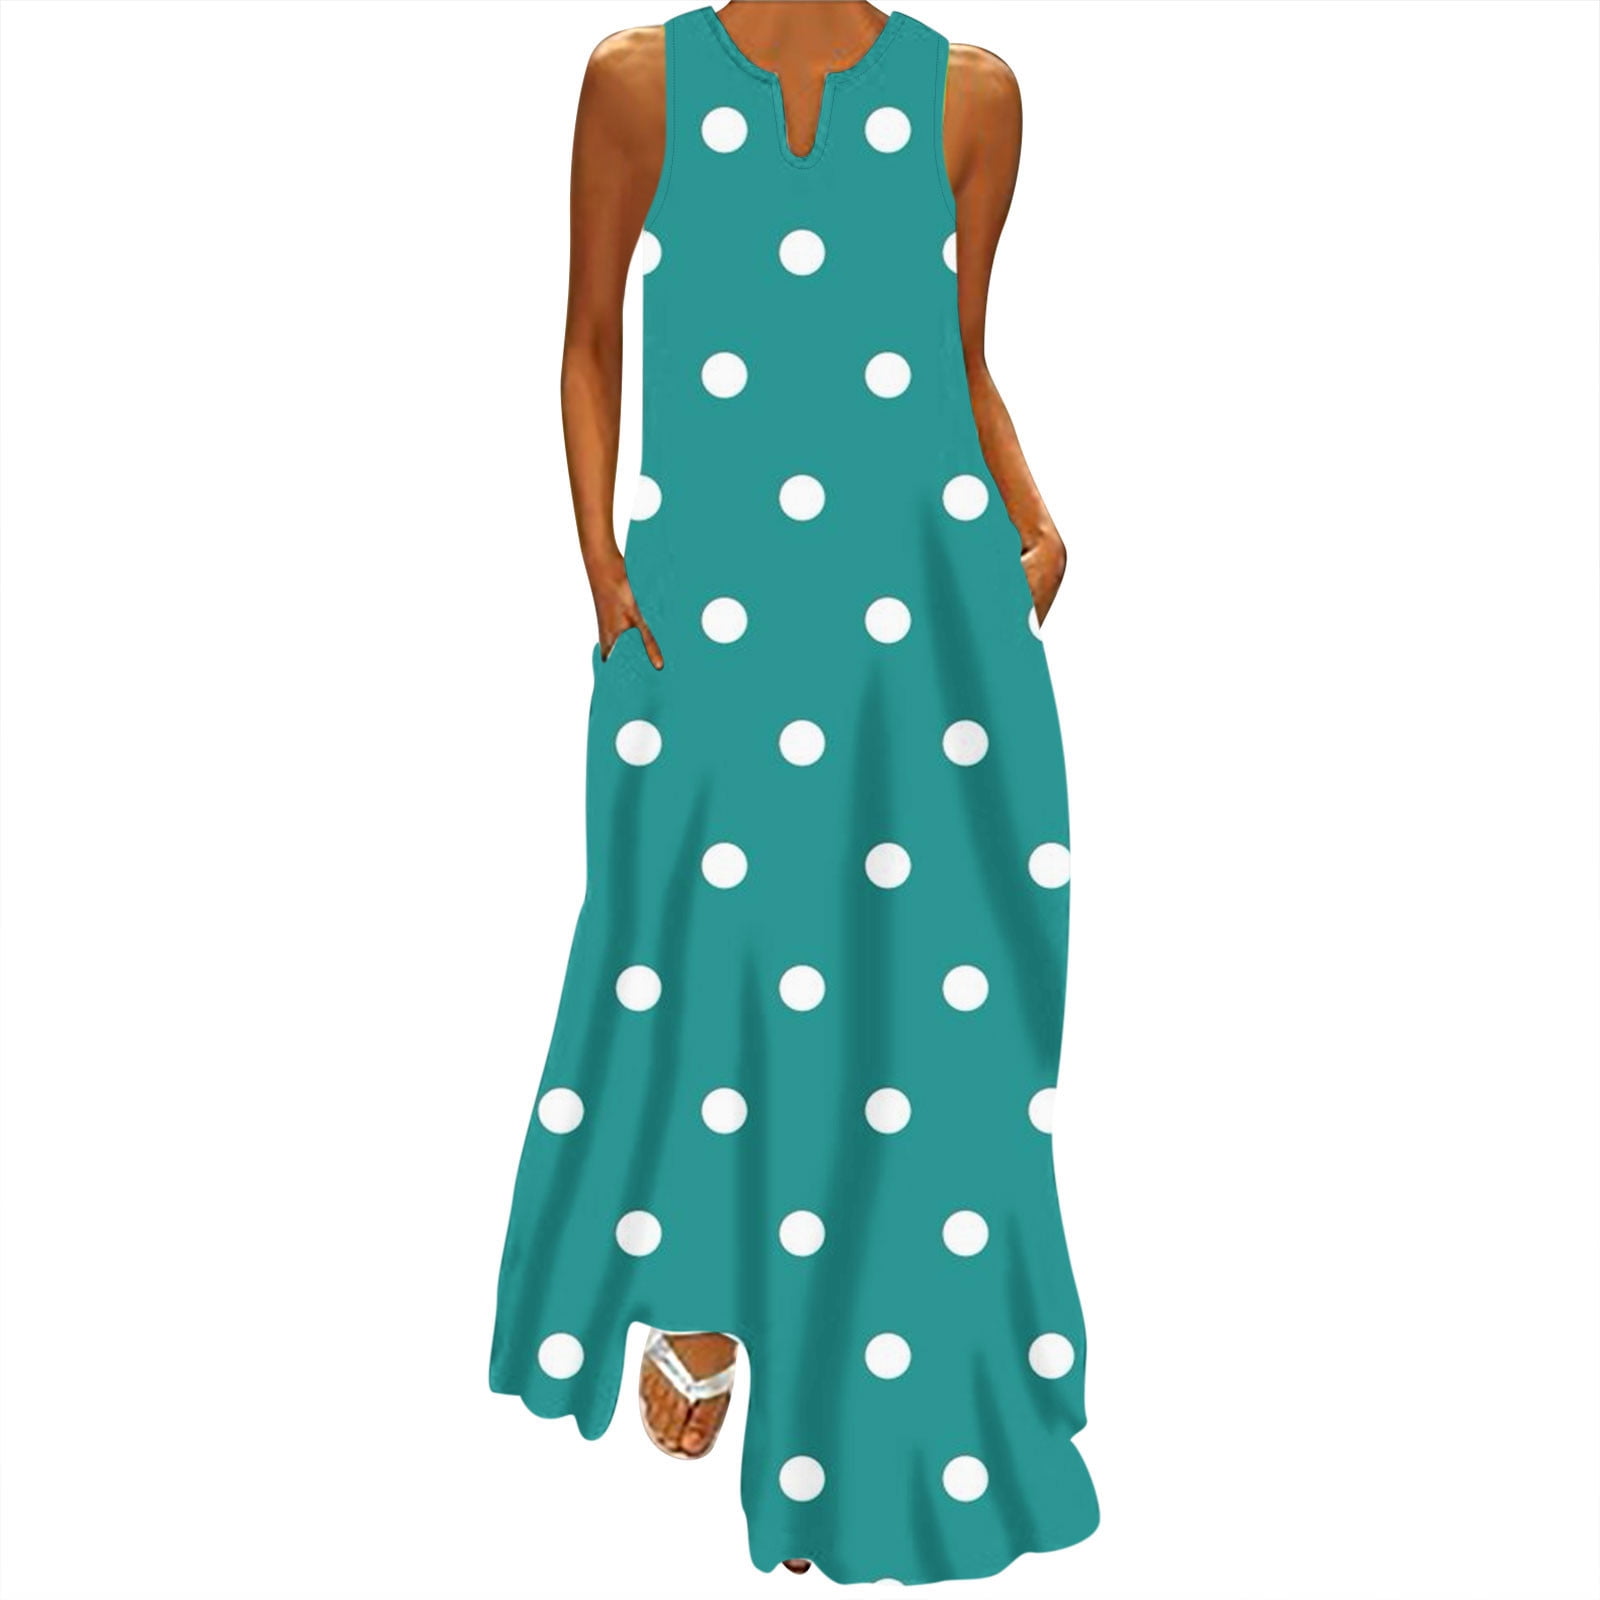 Amzcrzy Womens Summer Beach Dress Casual Fashion Sleeveless Plus Size ...